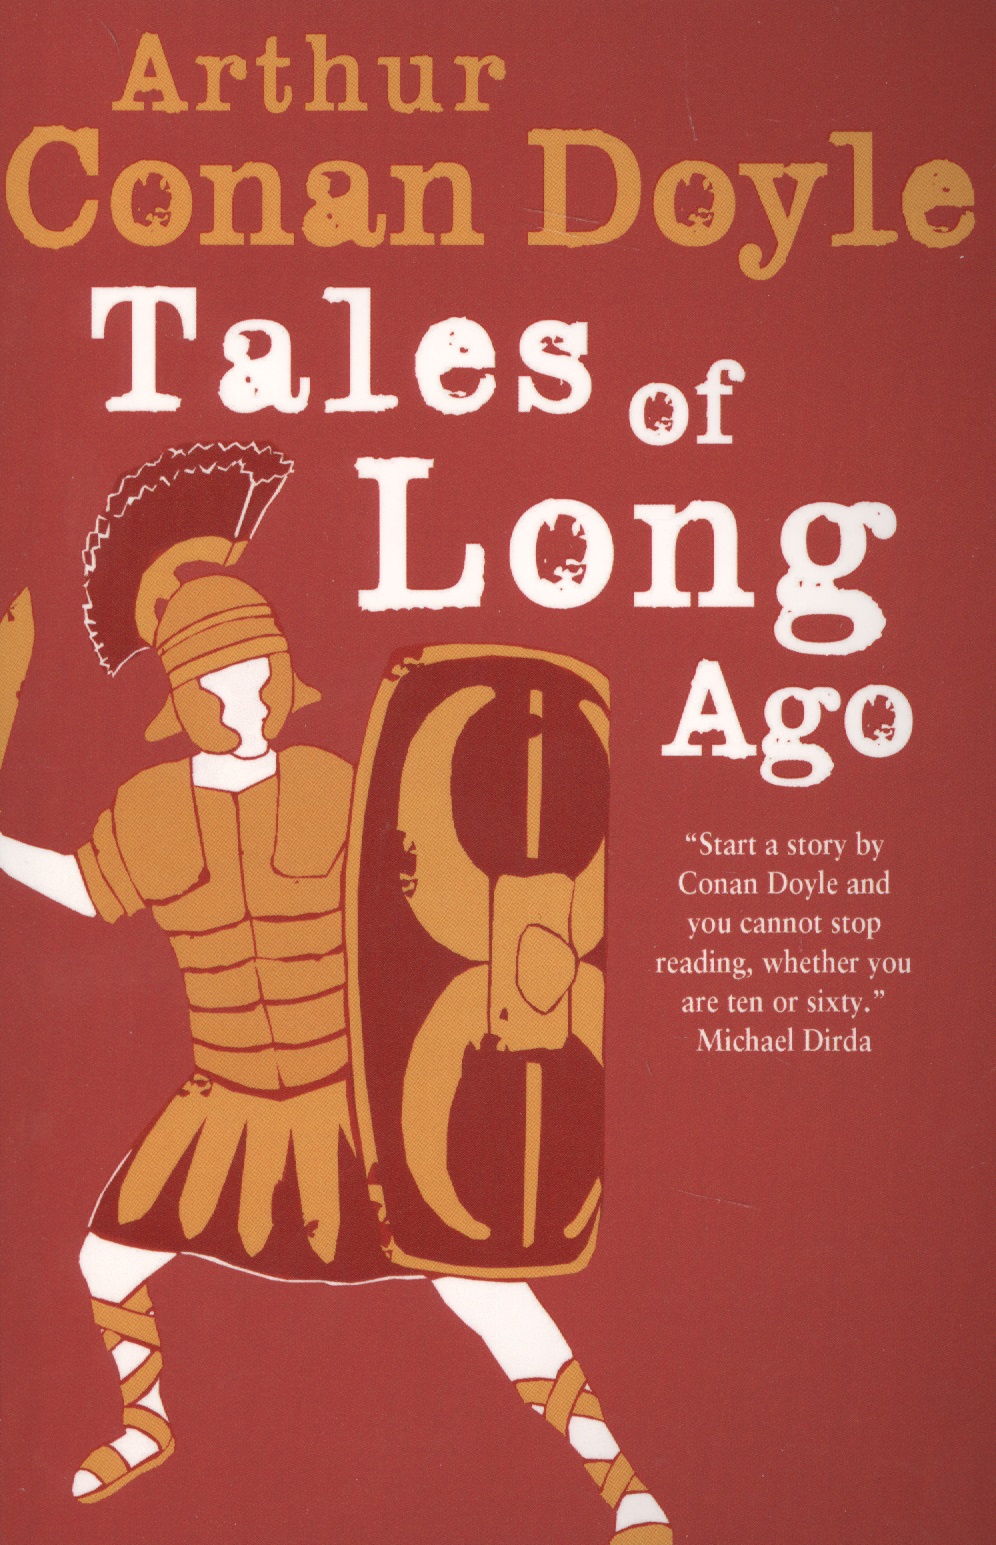 doyle arthur conan tales of long ago Дойл Артур Конан Tales of Long Ago